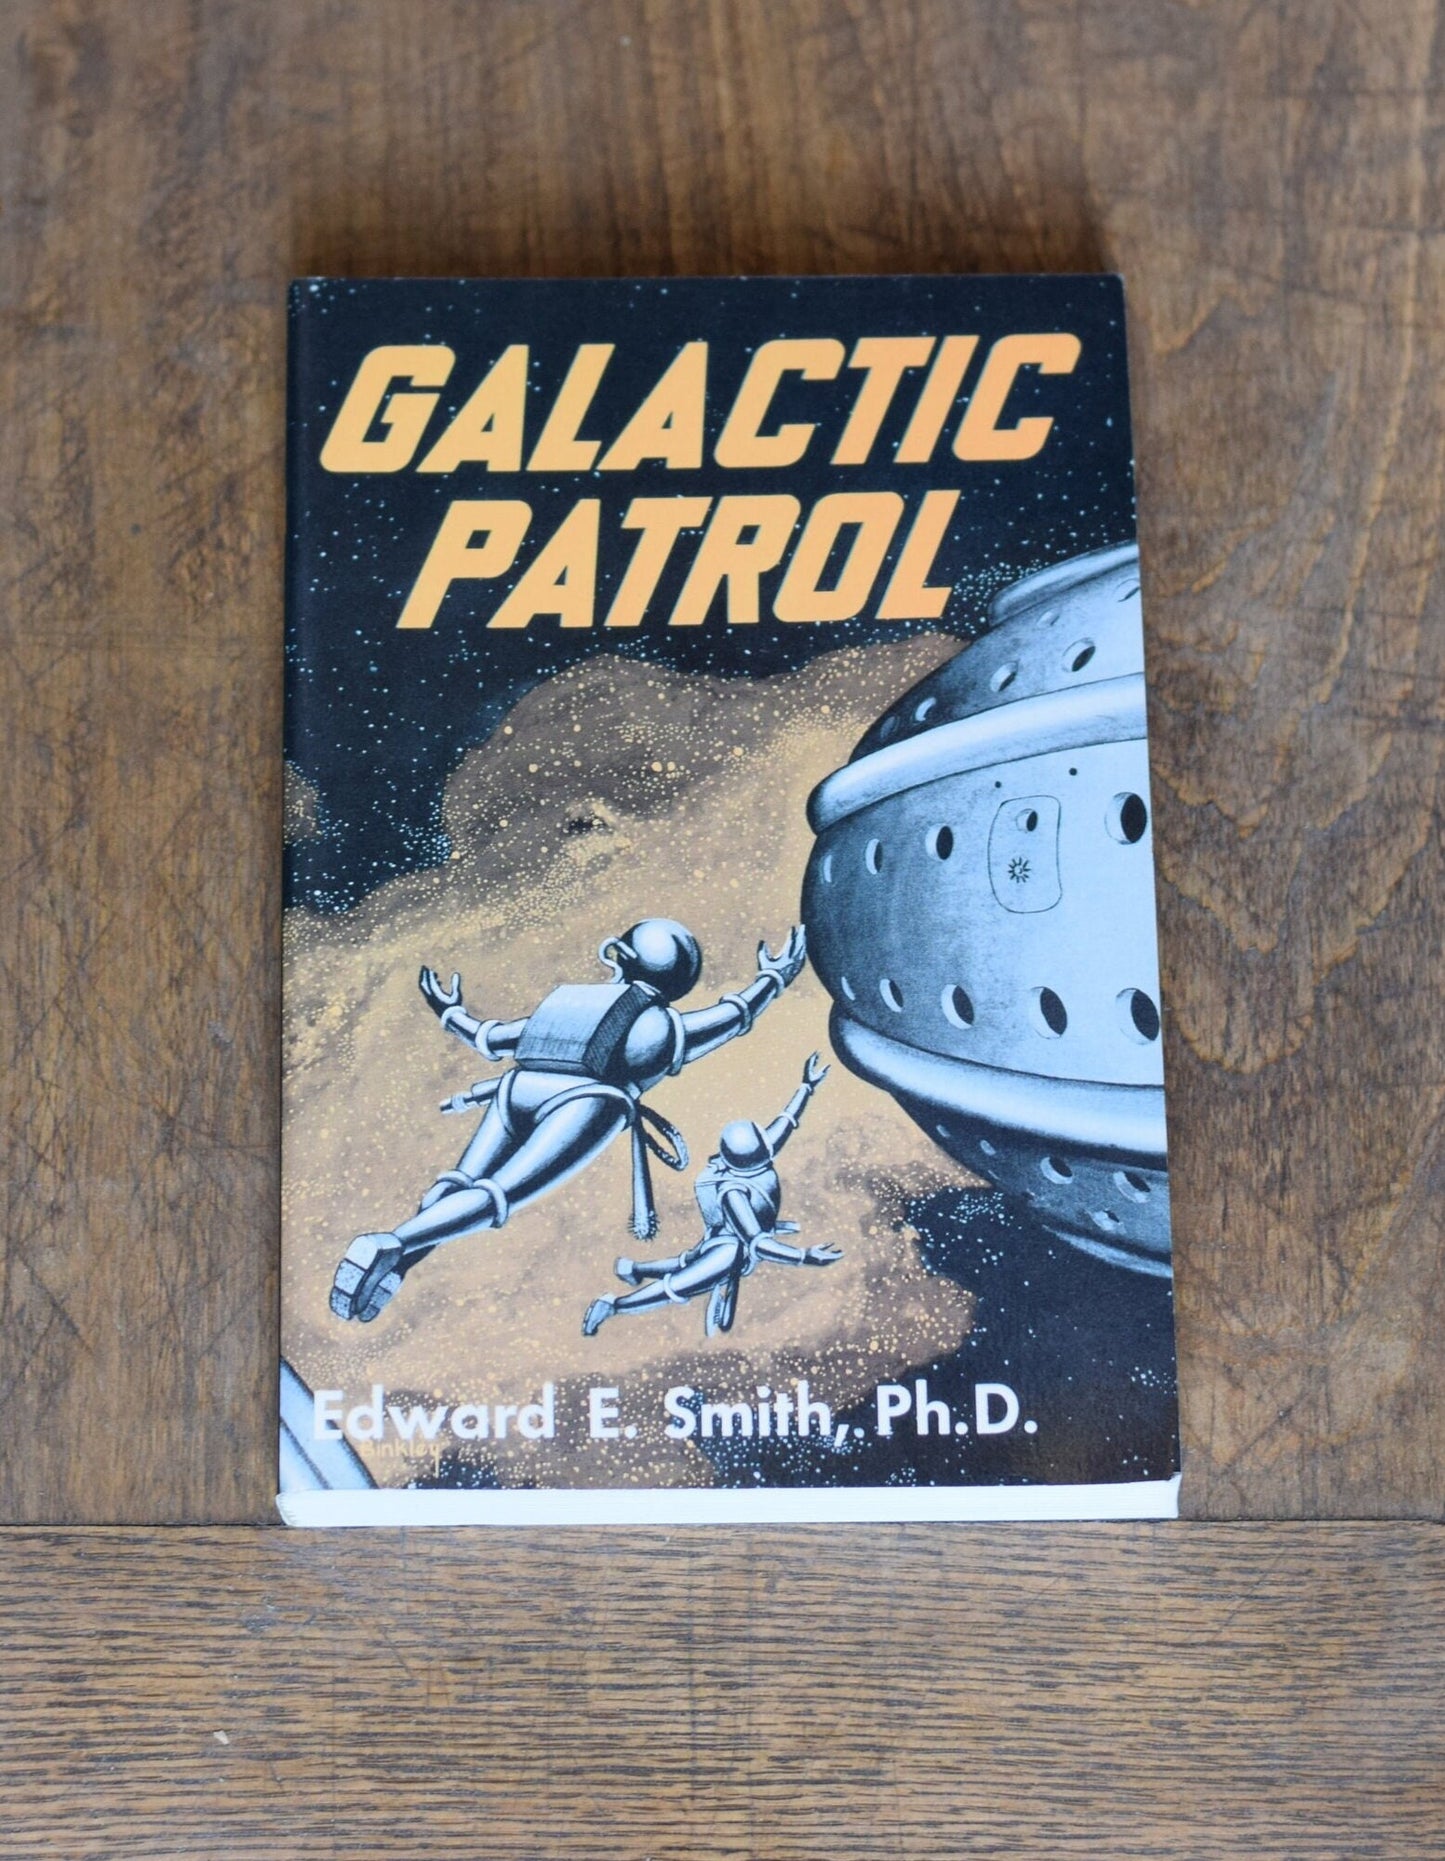 Vintage Sci-Fi Paperback Novel: Edward E Smith PHD - Galactic Patrol FIRST PRINTING